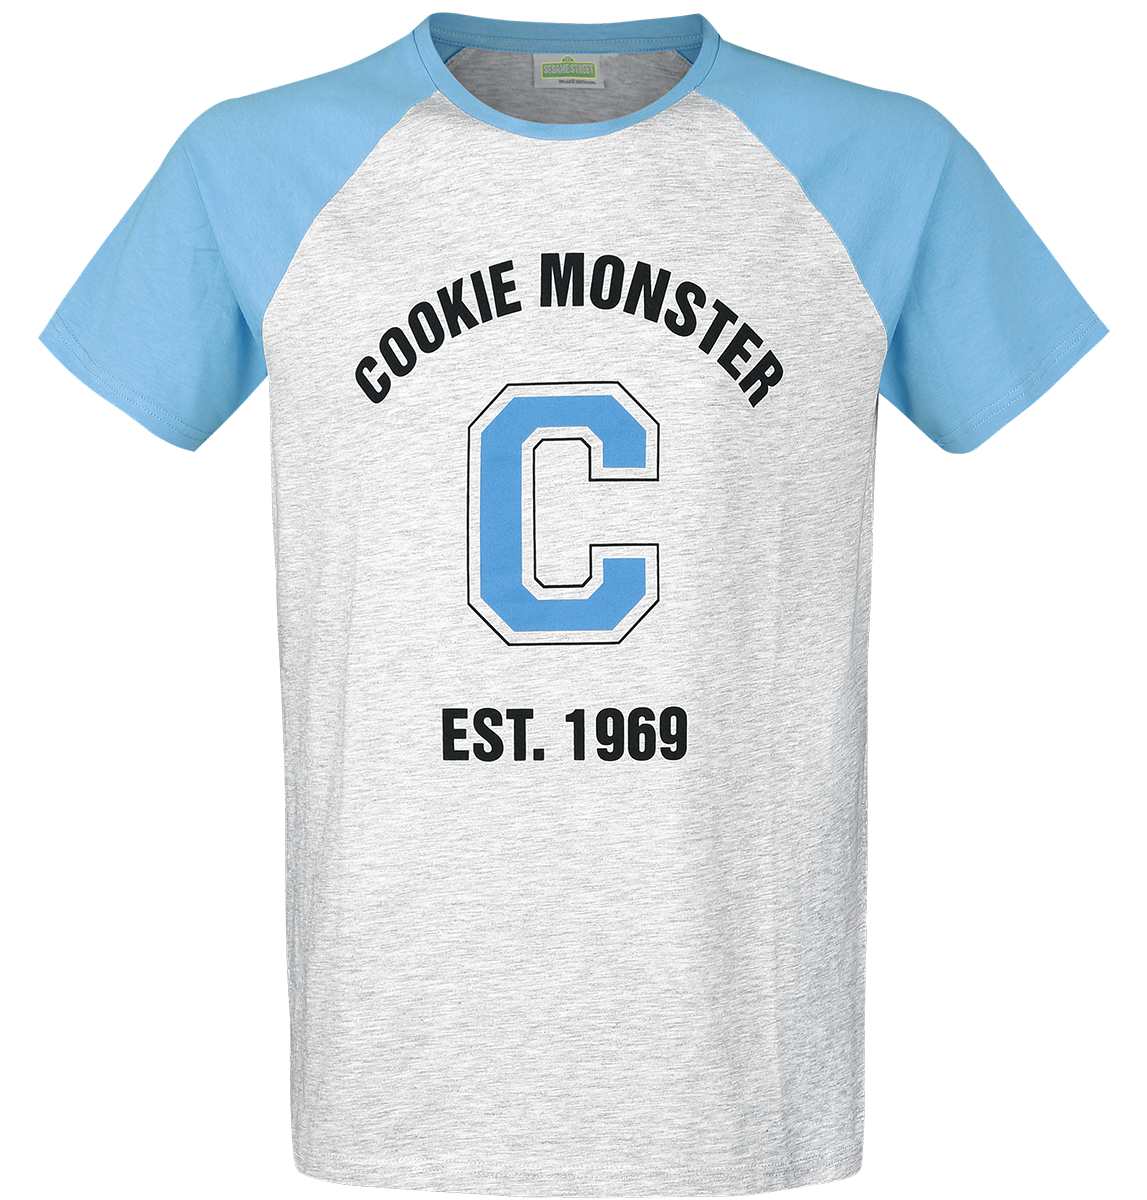 Sesame Street - Cookie Monster - Est. 1969 - T-Shirt - grey-blue image